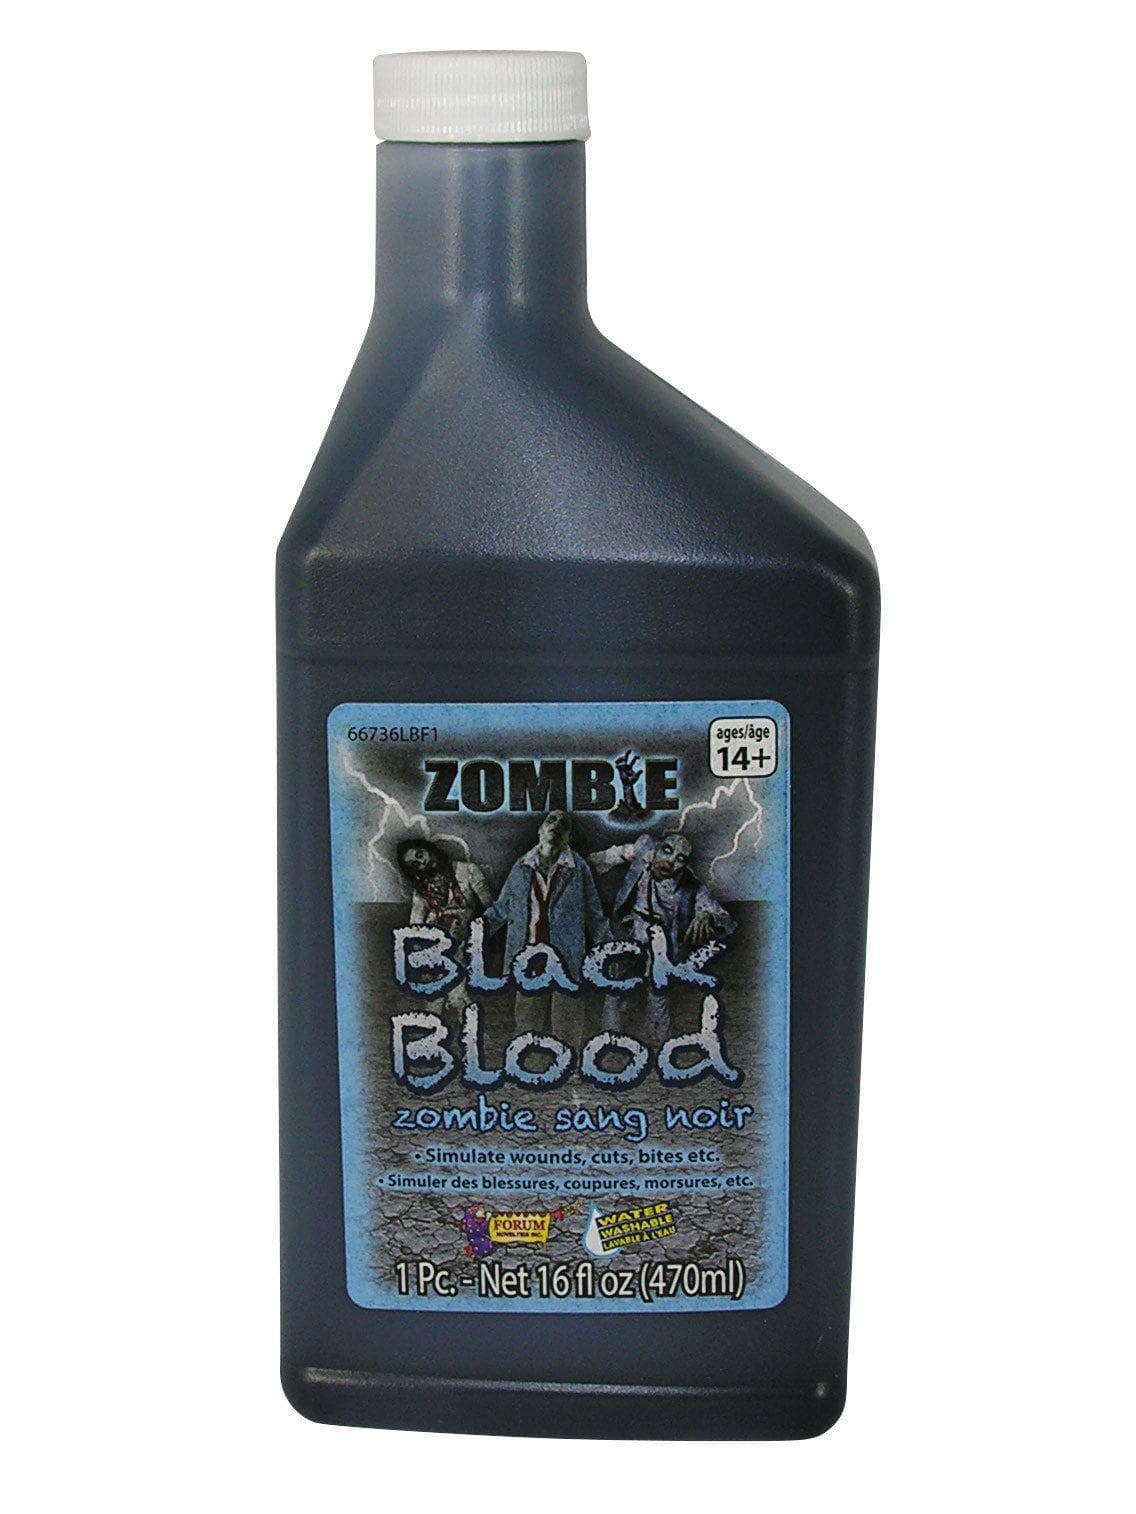 Zombie Black Blood - costumes.com